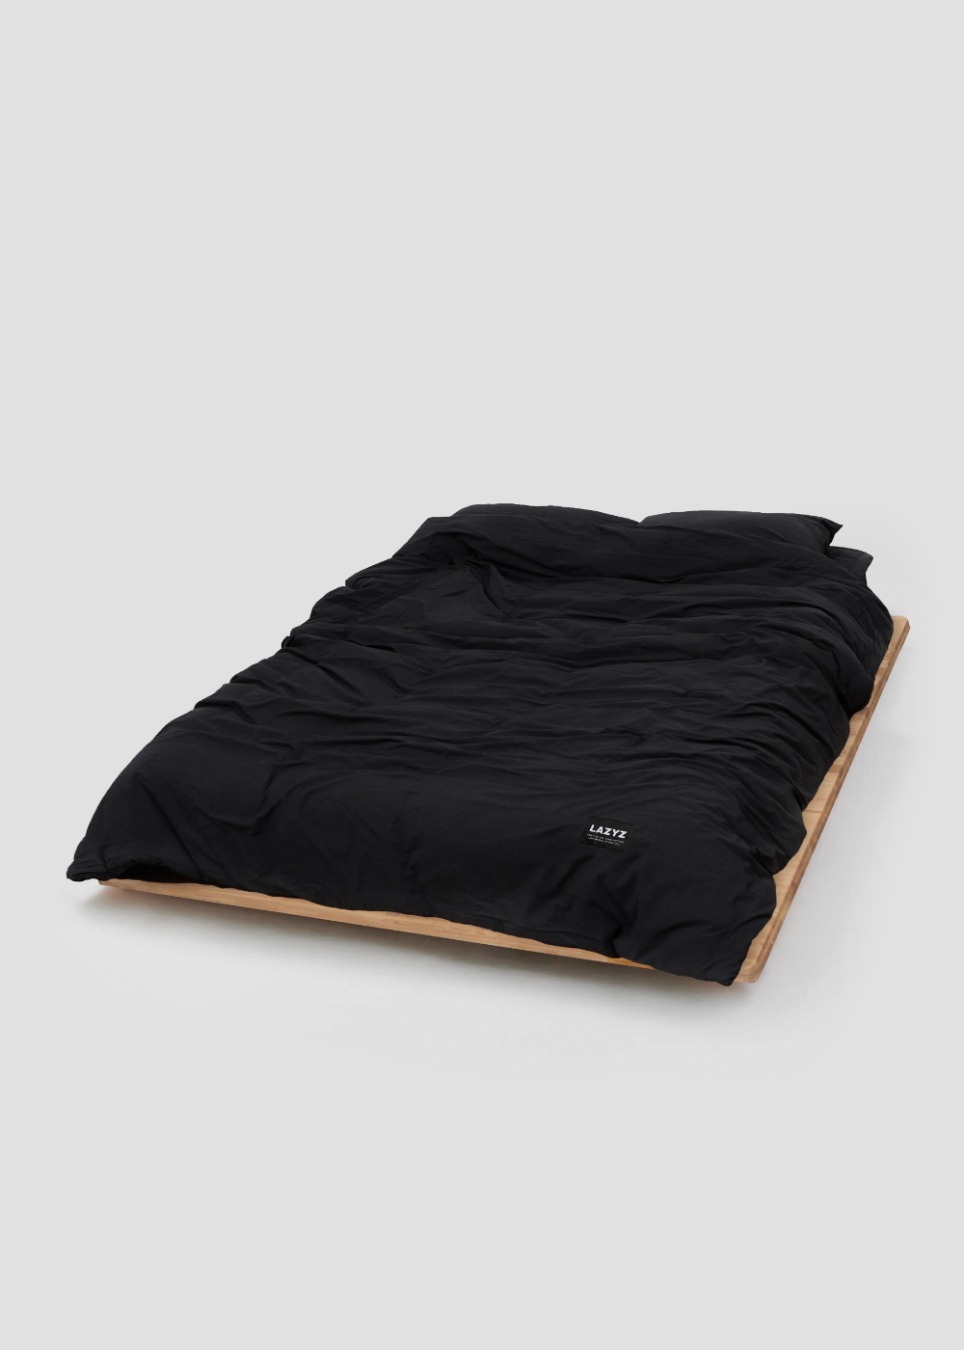 Lazyz Classic Home Comforter - All Black